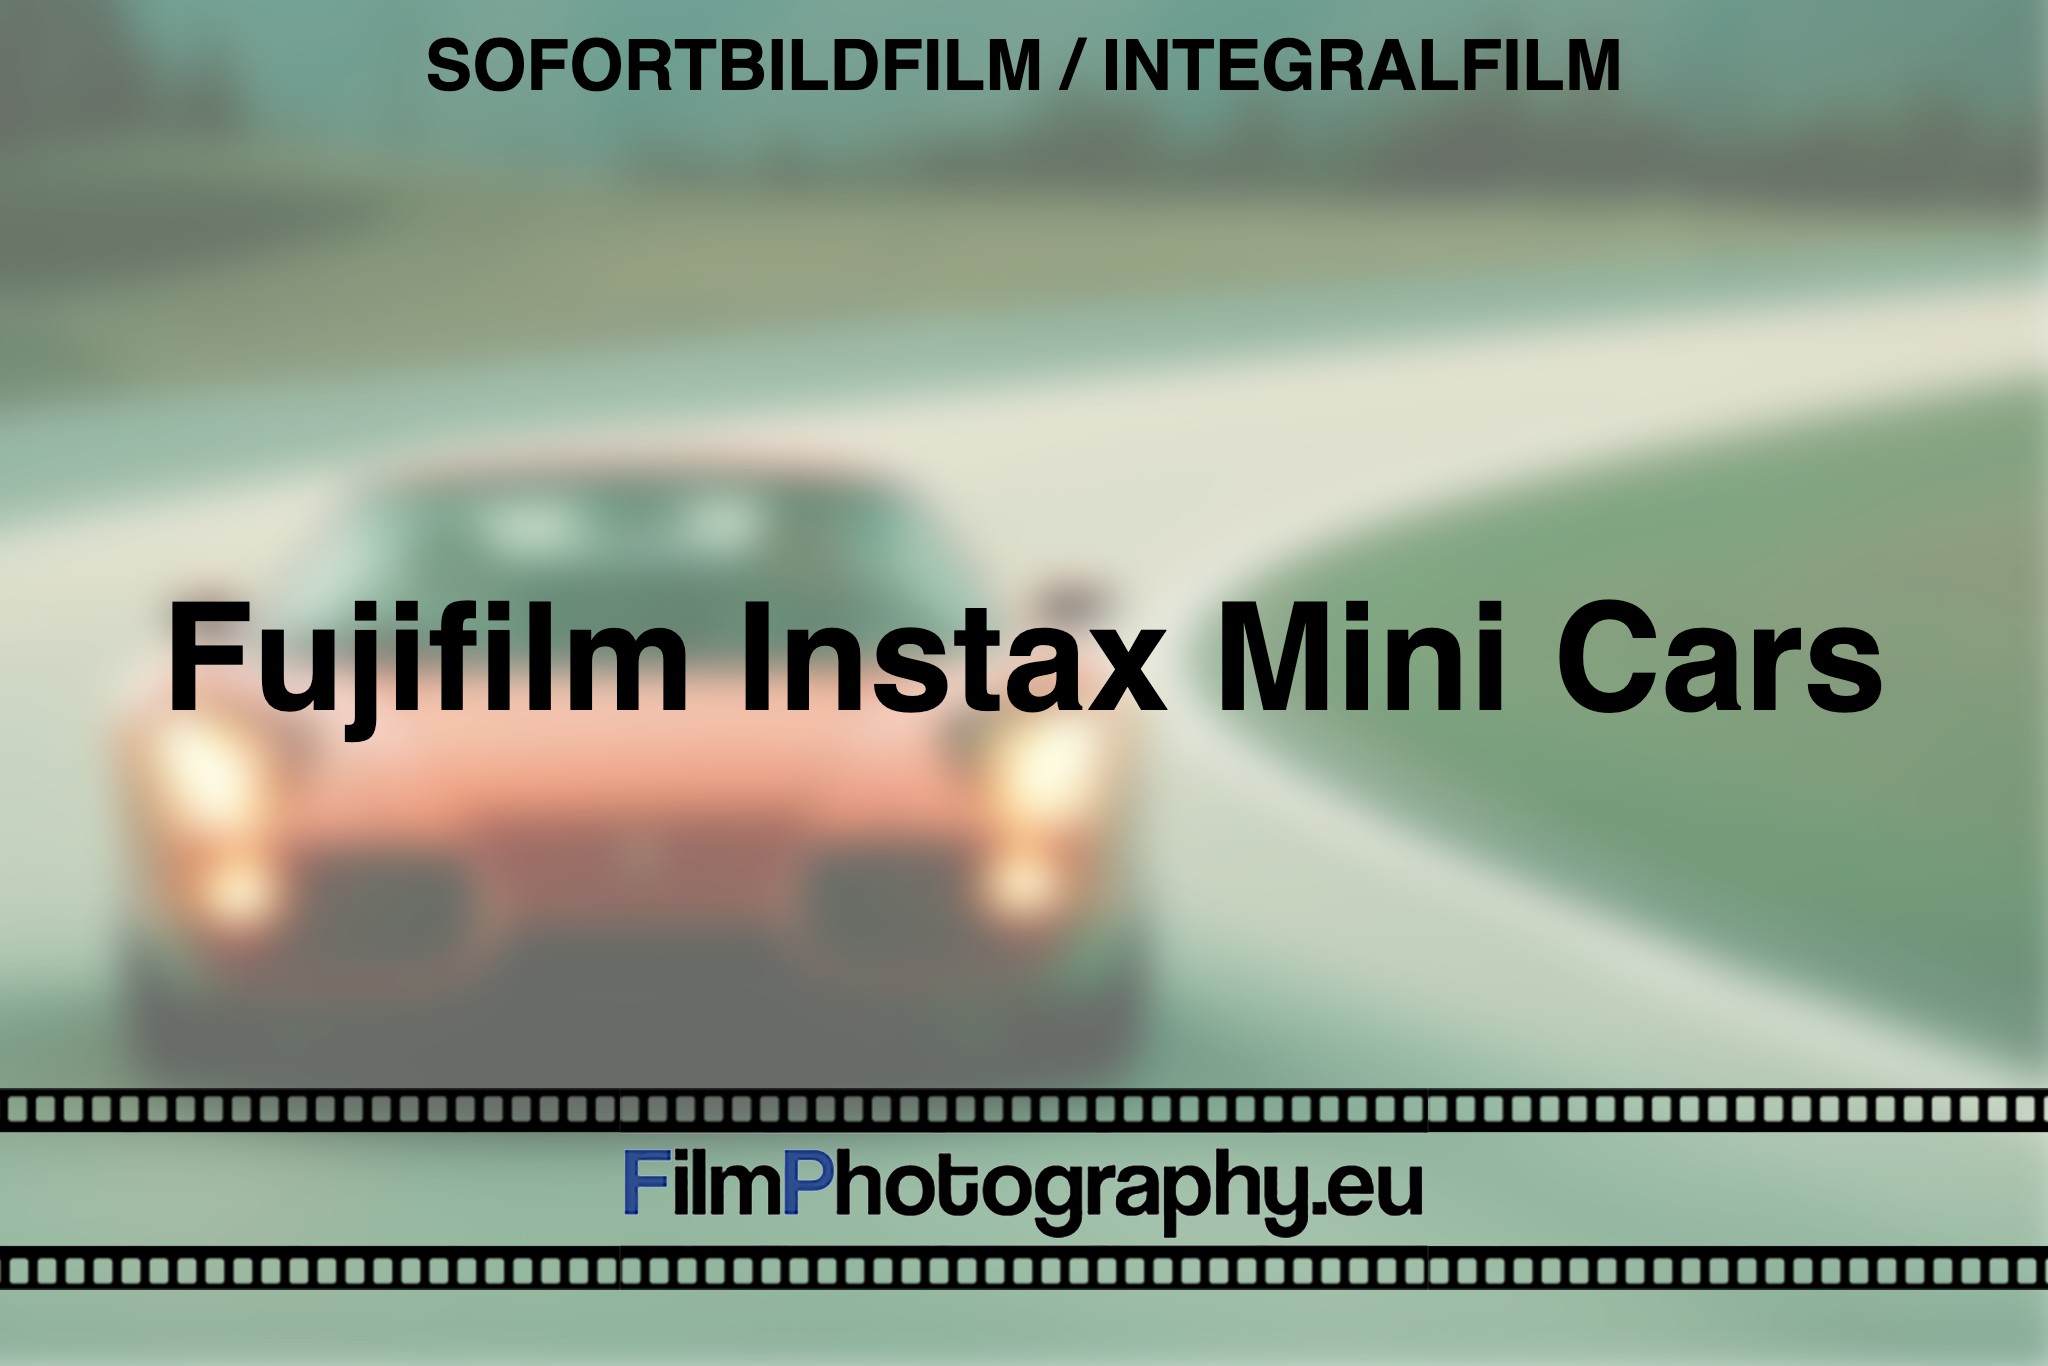 fujifilm-instax-mini-cars-sofortbildfilm-integralfilm-fp-bnv